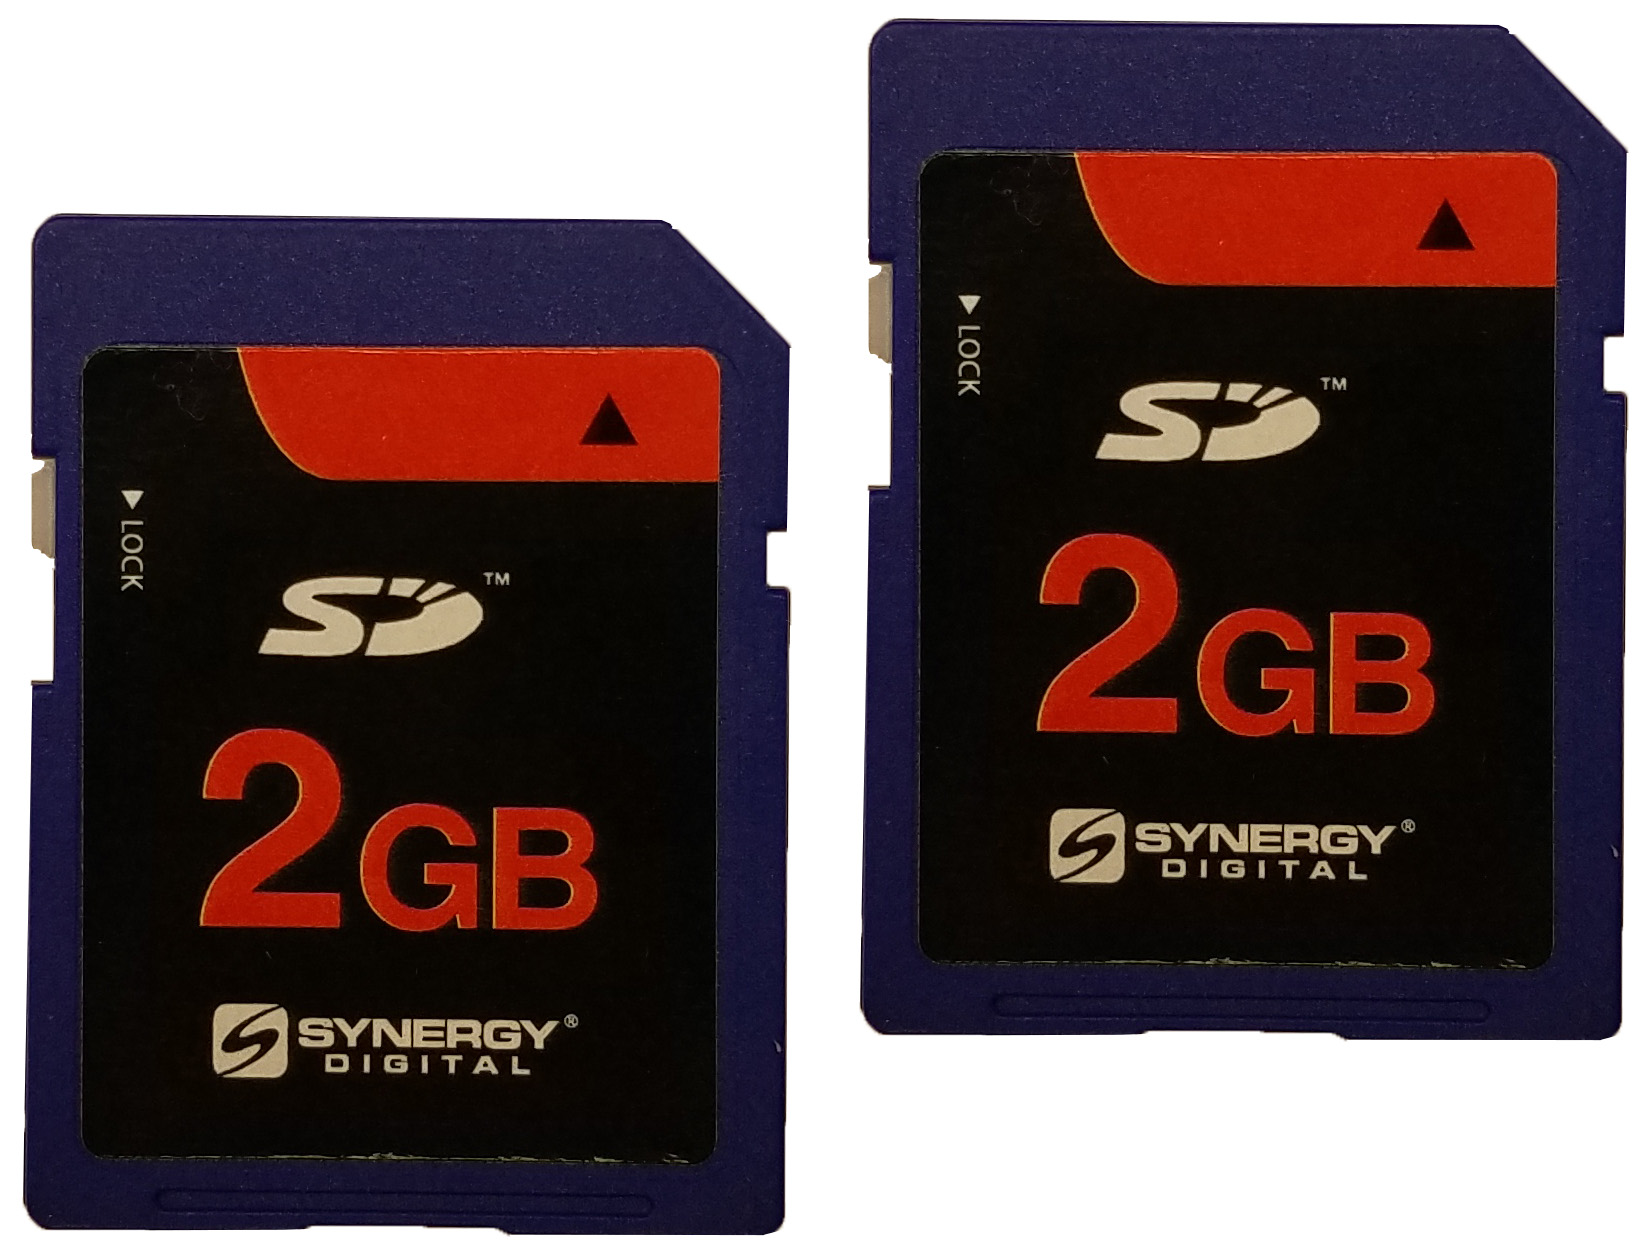 2 x 2GB Standard Secure Digital (SD) Memory Card (1 Twin Pack)